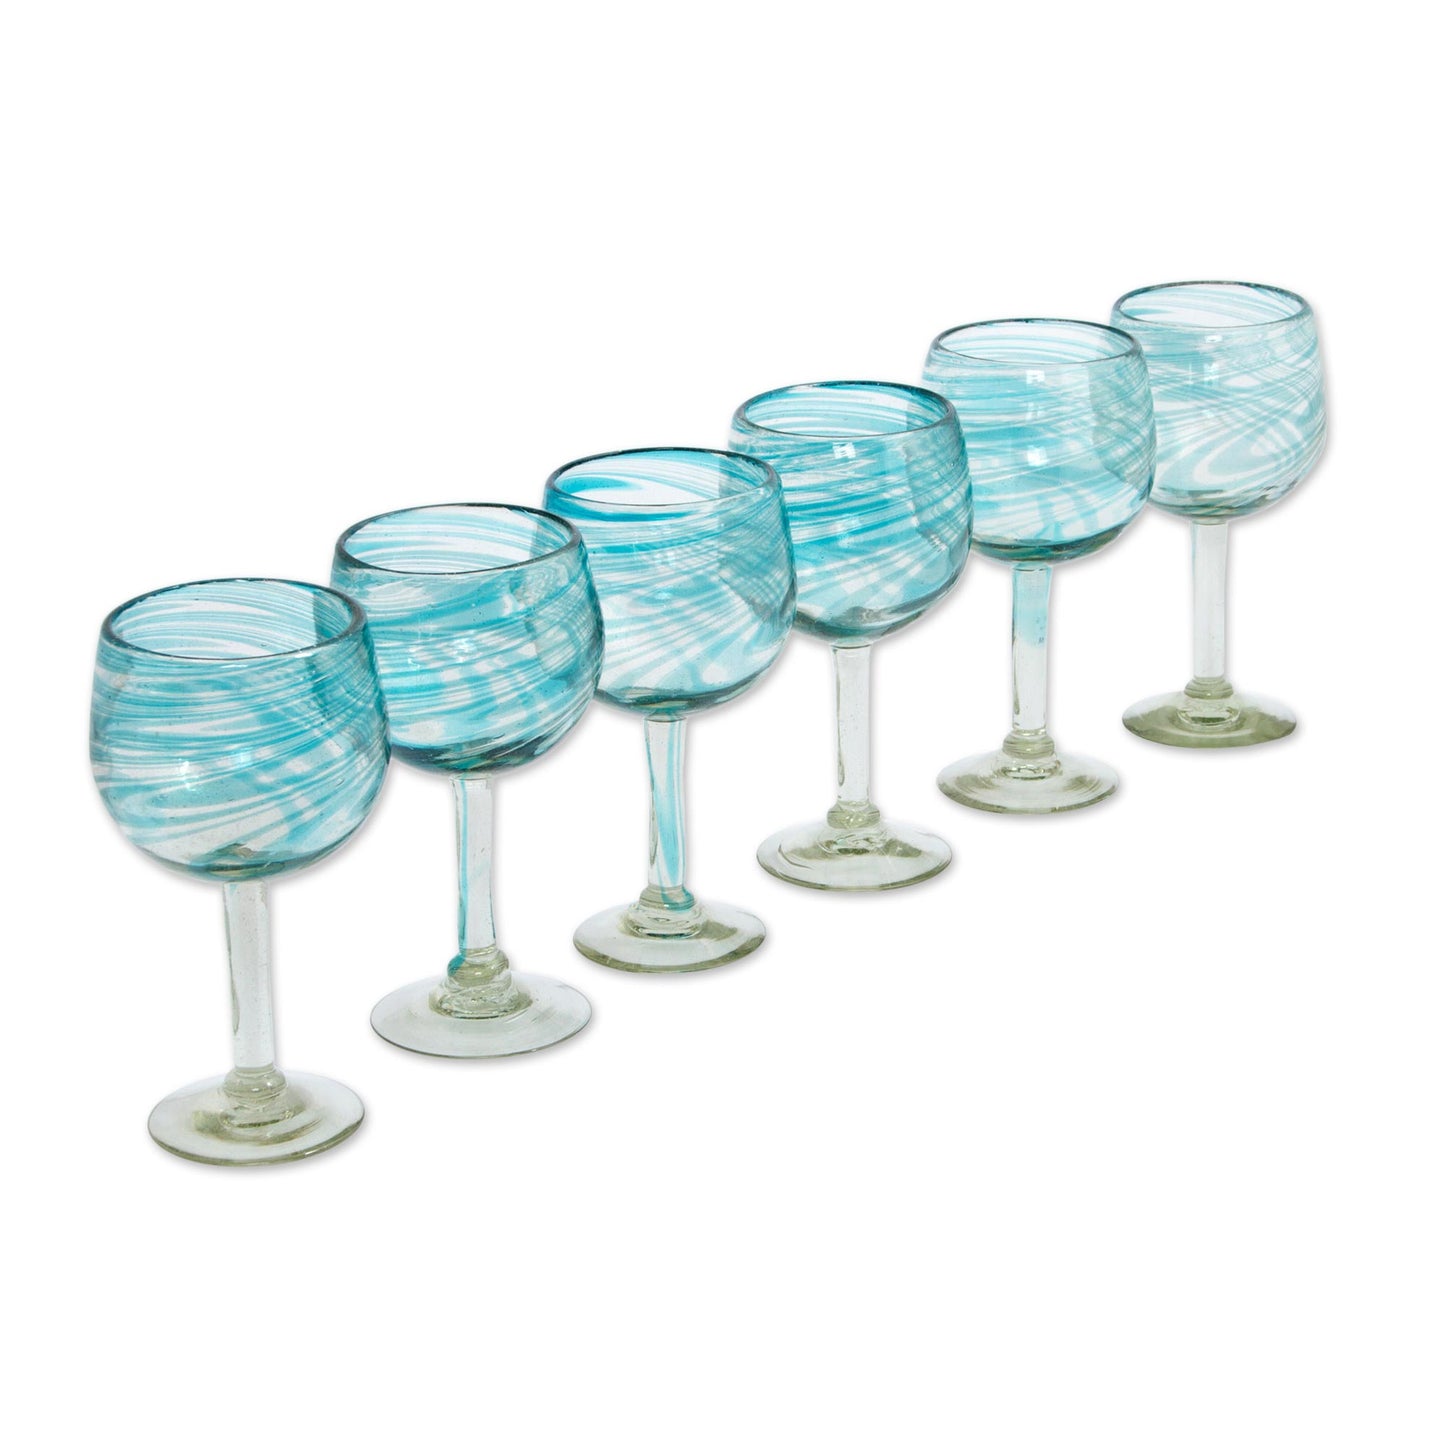 Elegant Aqua Swirl Set of 6 Recycled Hand Blown Aqua Wine Glasses from Mexico